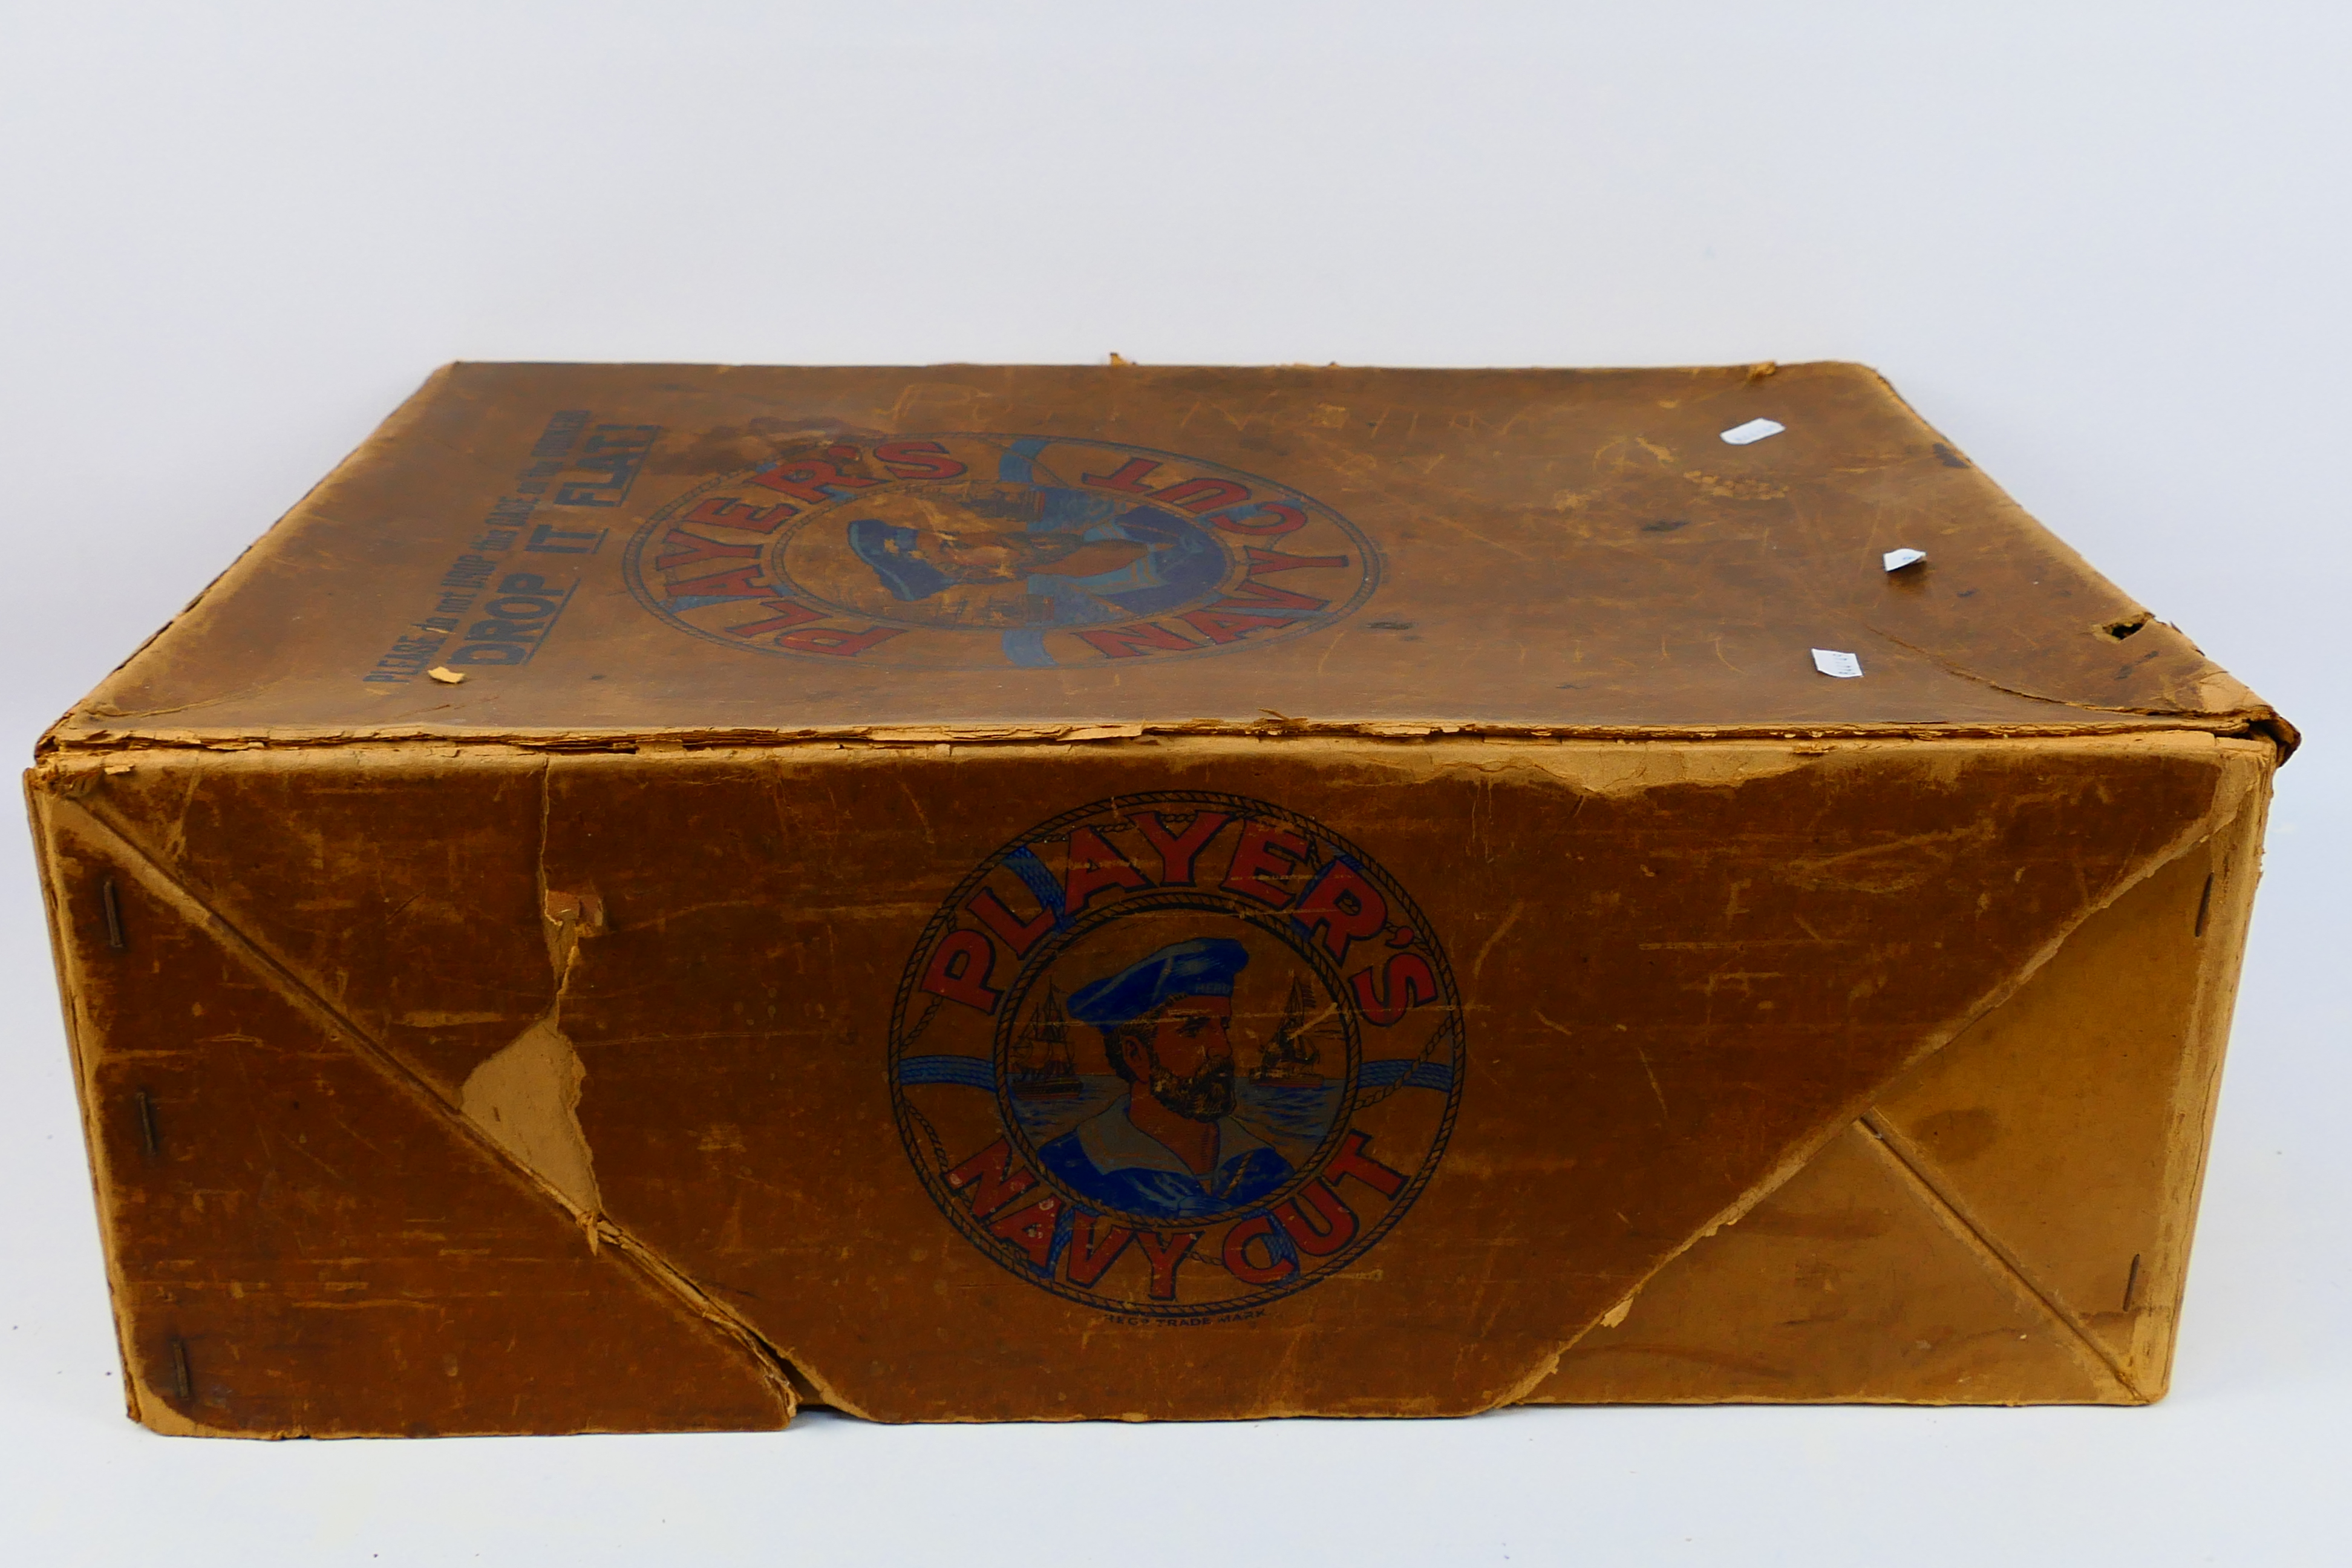 A large size vintage Players Navy cut cigarette retailers box, approximately 57 cm x 42 cm x 20 cm. - Image 3 of 6